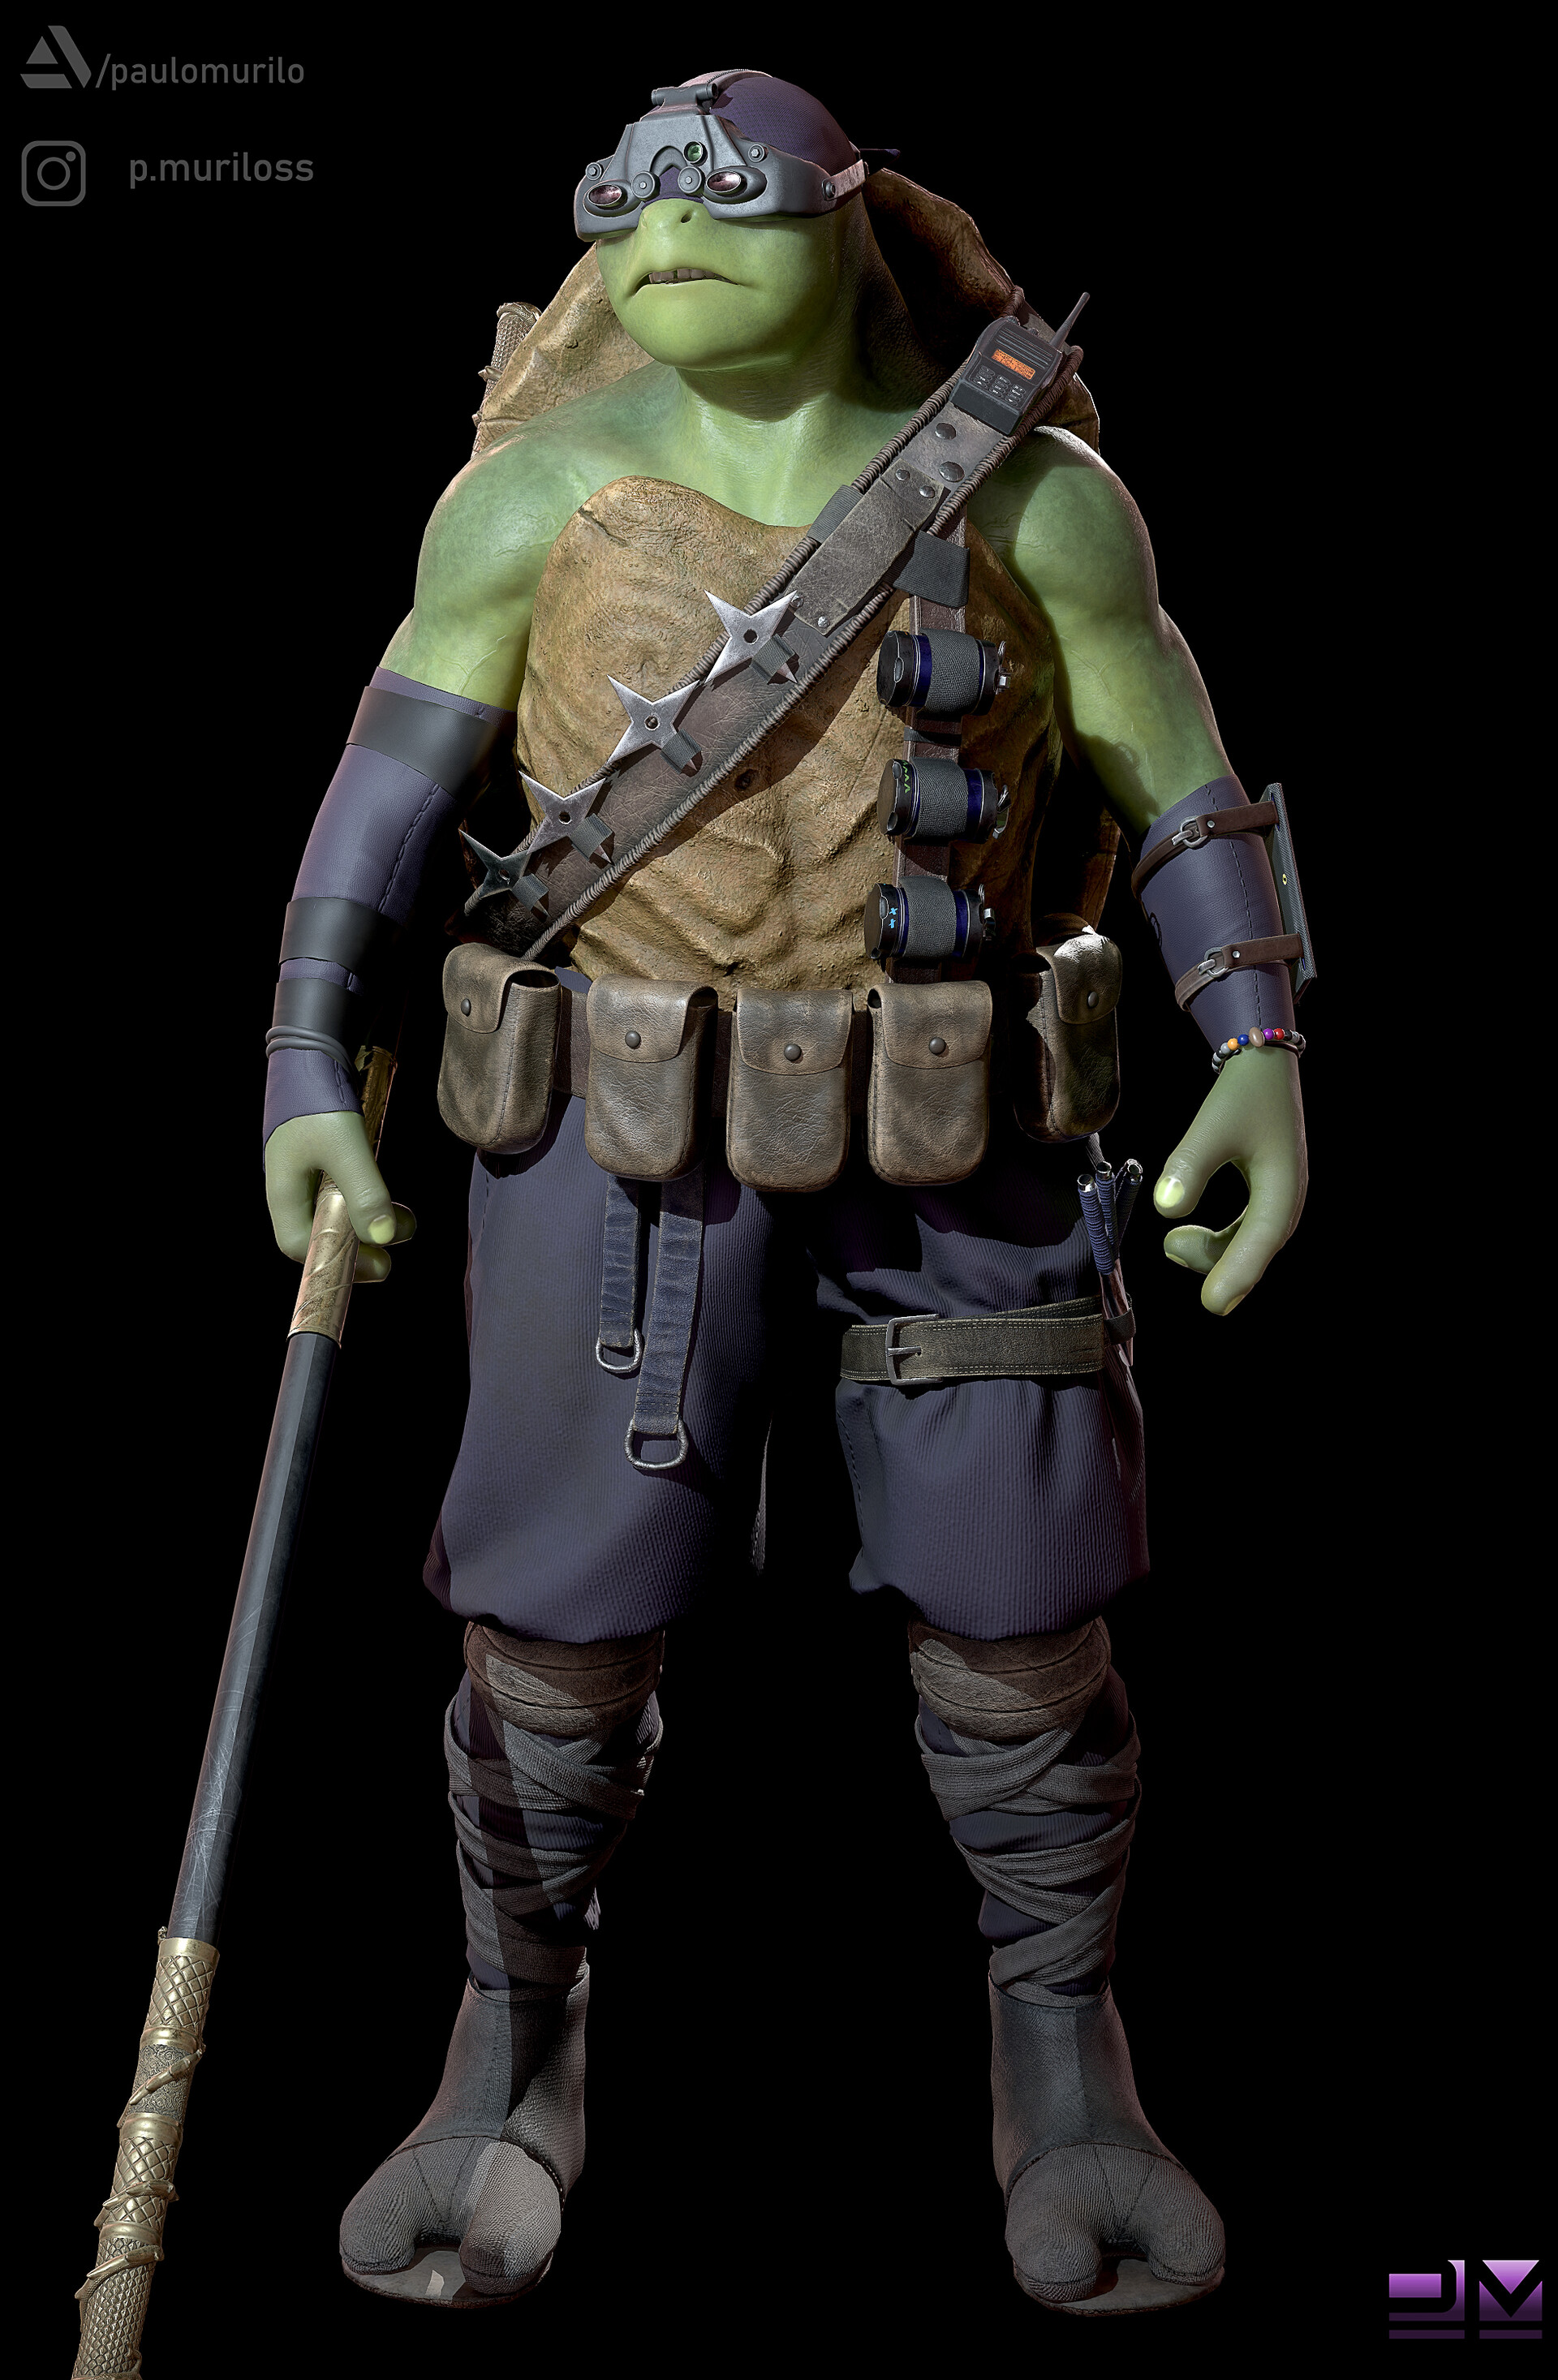 ArtStation - Donatello from Teenage Mutant Ninja Turtles